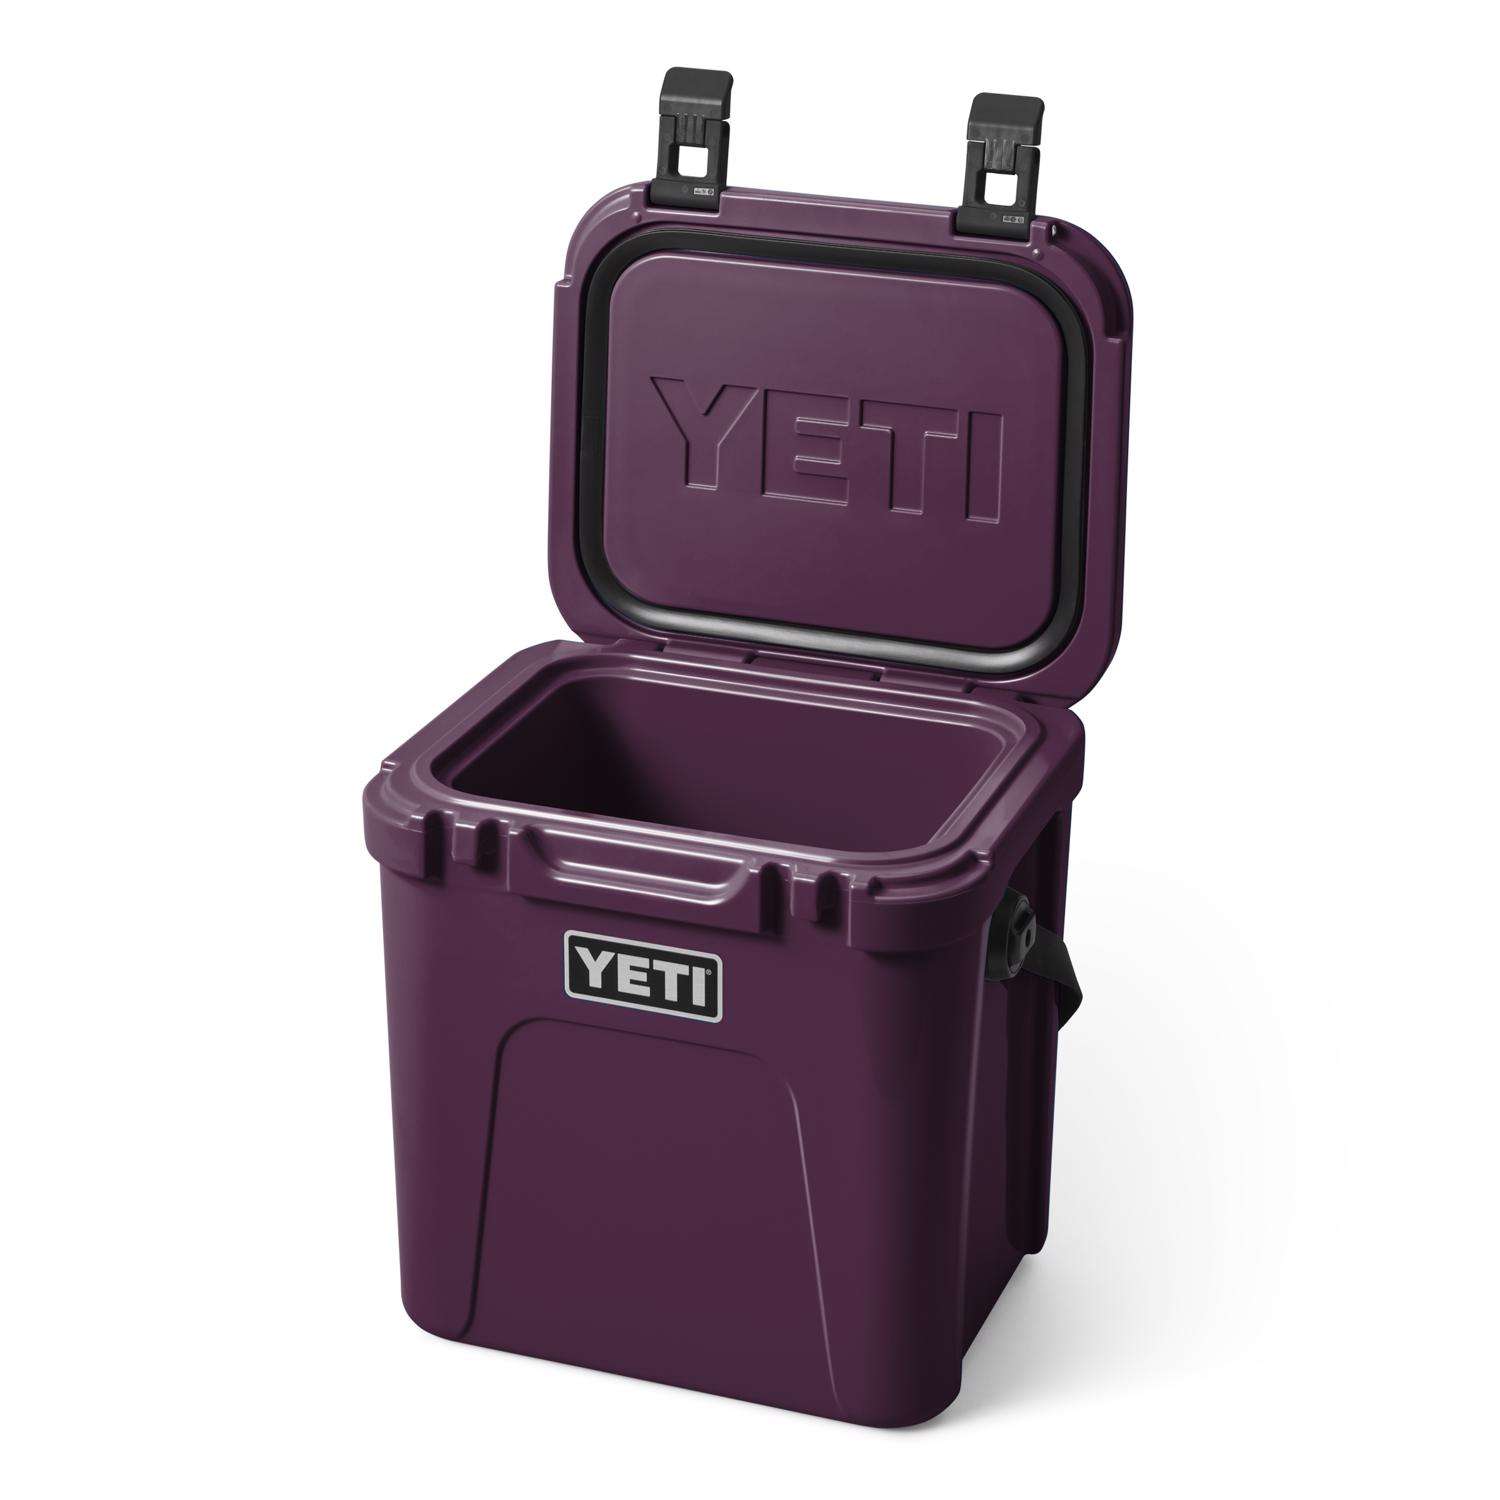 YETI Roadie 24 Hard Cooler -BIMINI PINK Limited Edition - New in Box